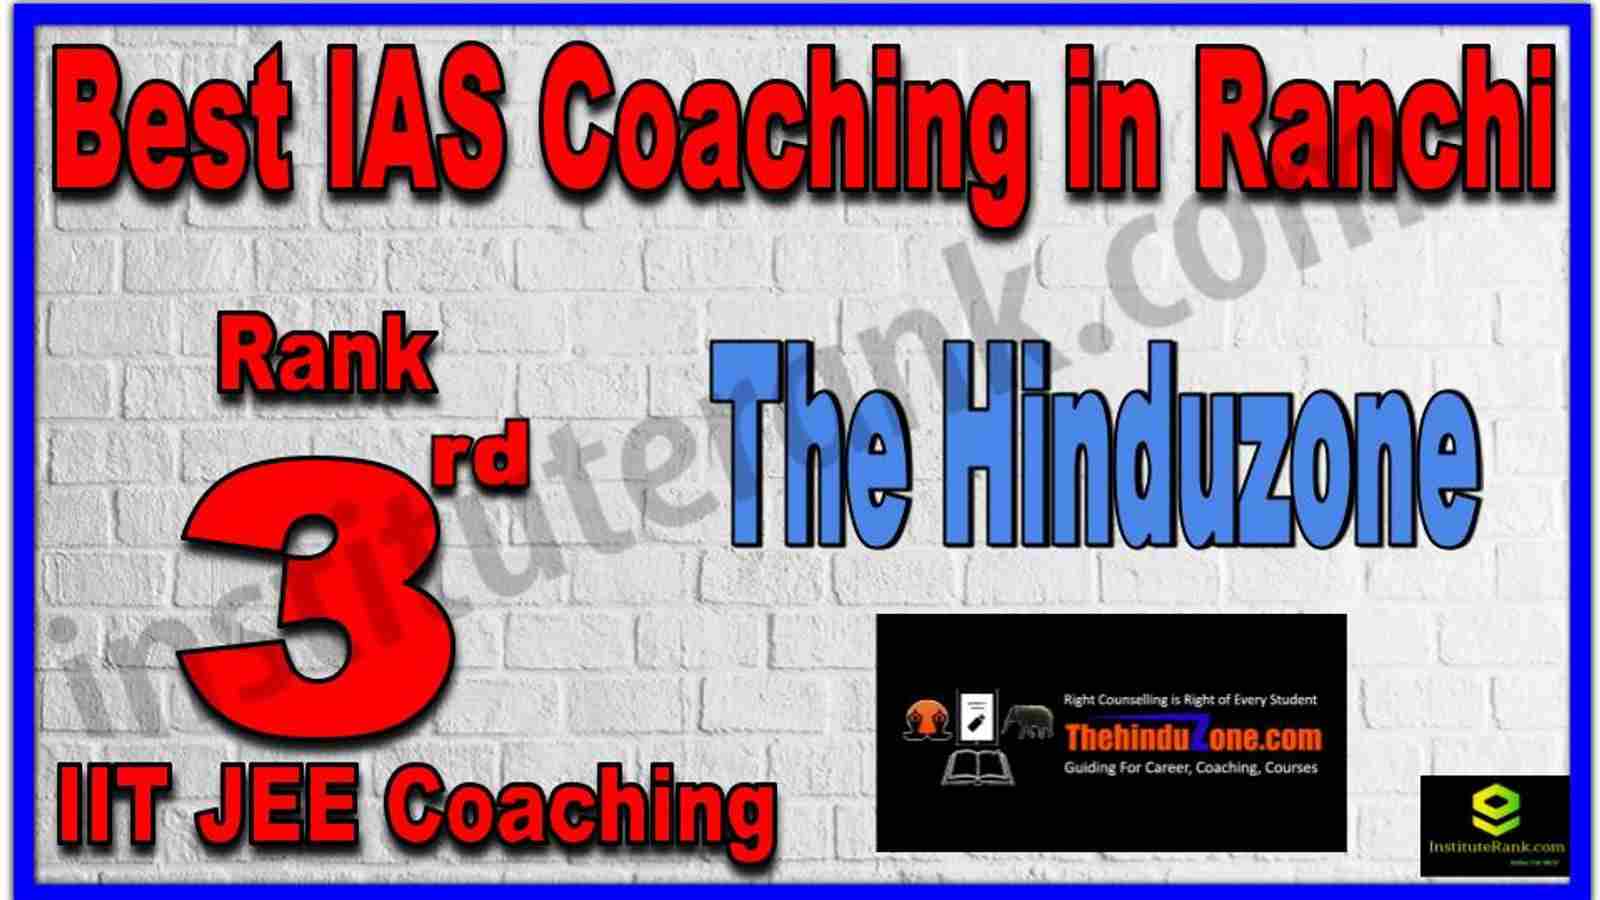 Rank 3rd Best IAS Coaching in Ranchi